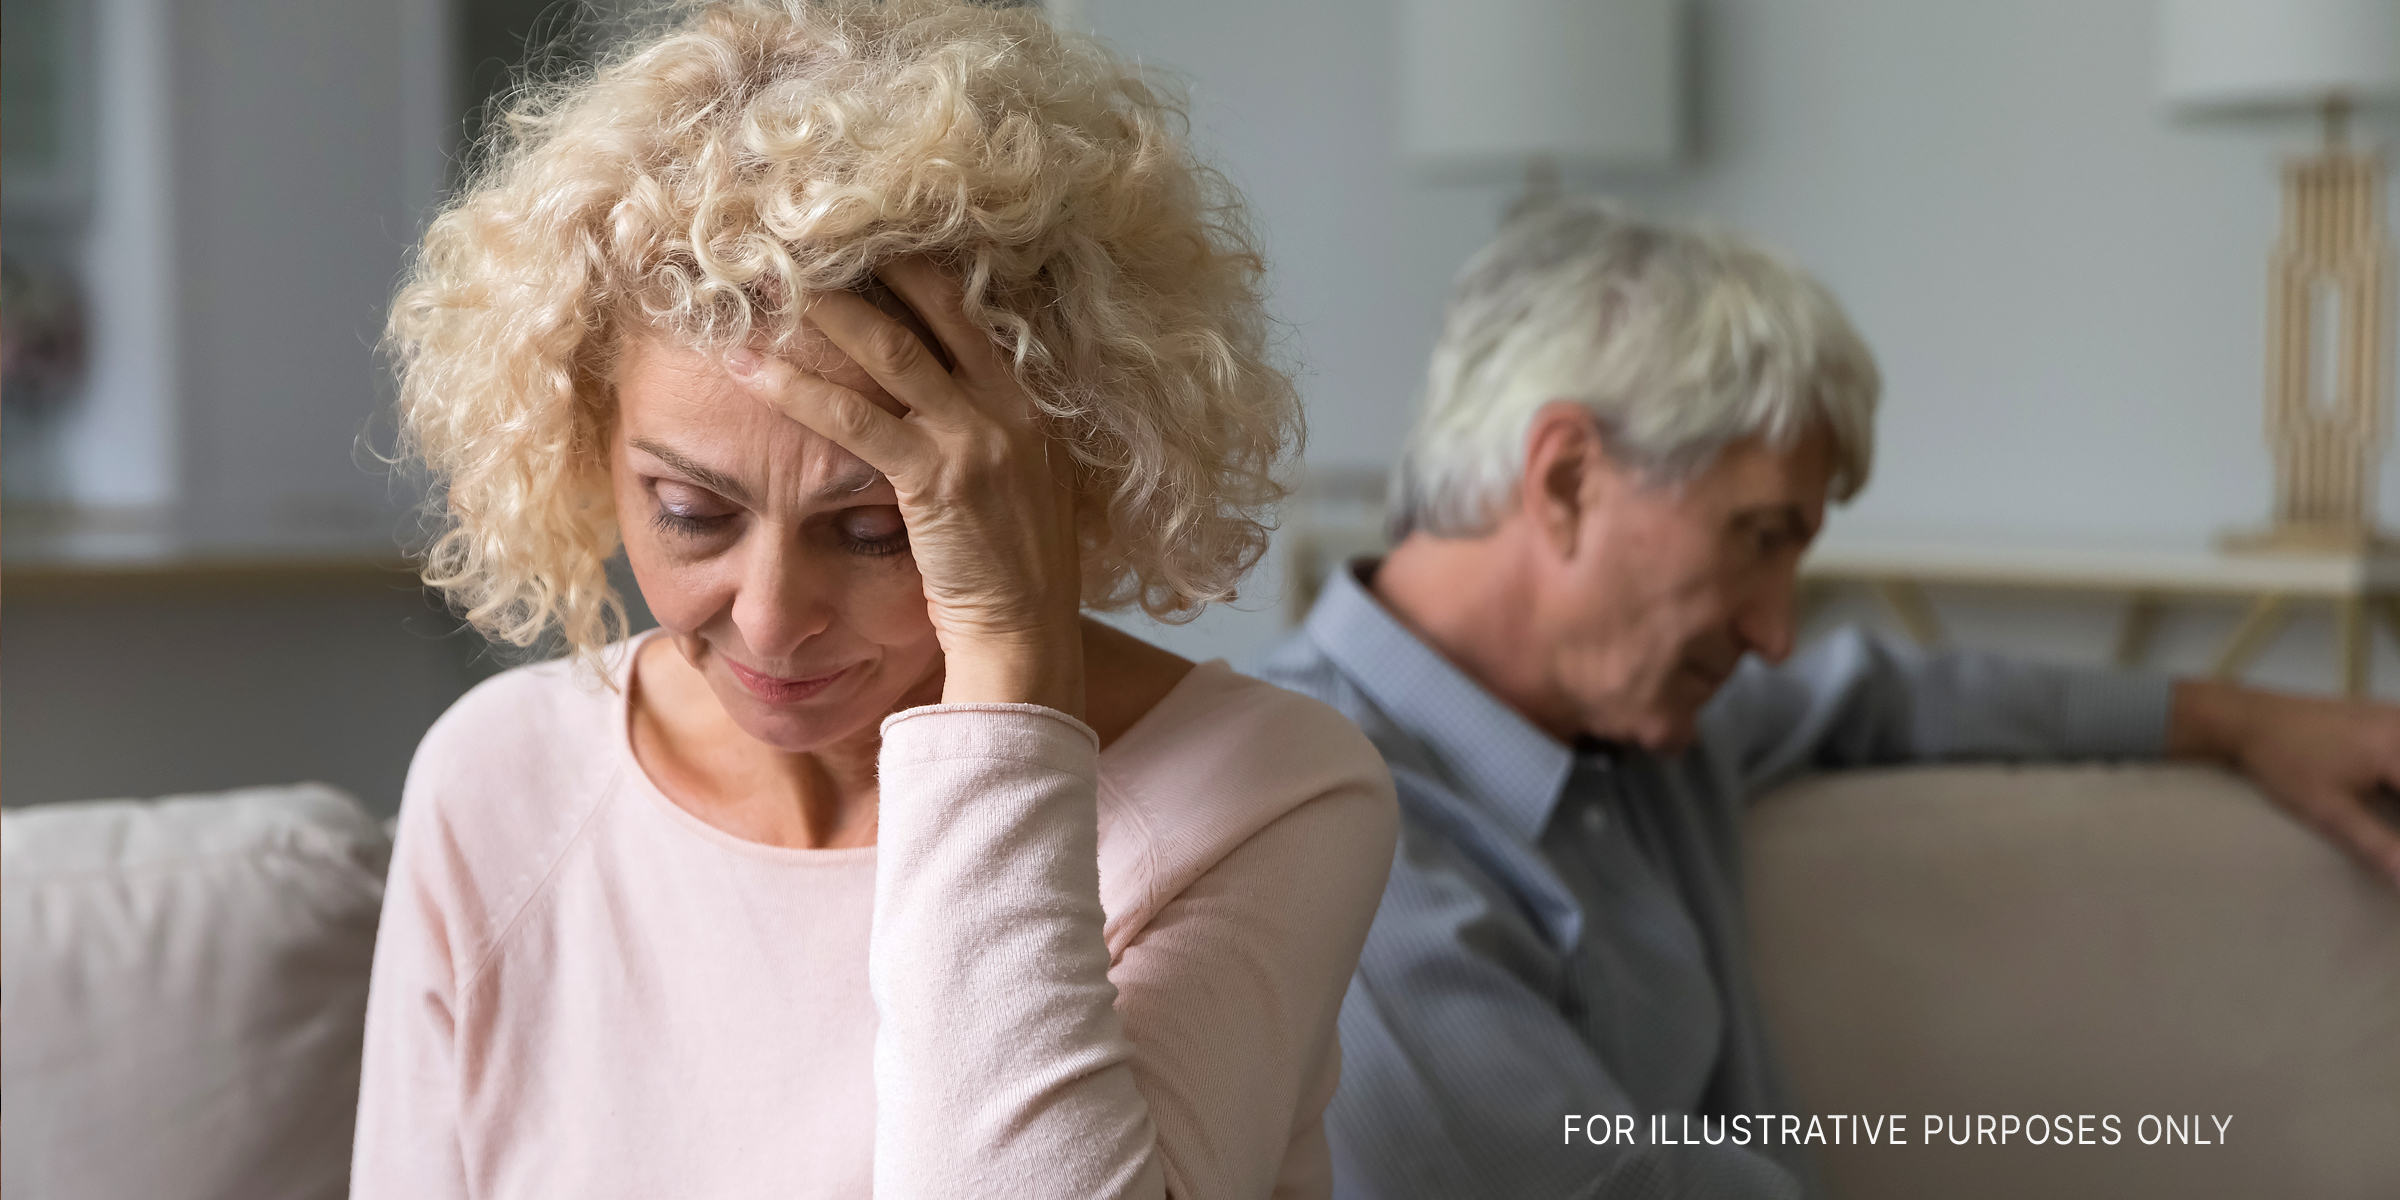 An elderly couple looking upset | Source: Shutterstock